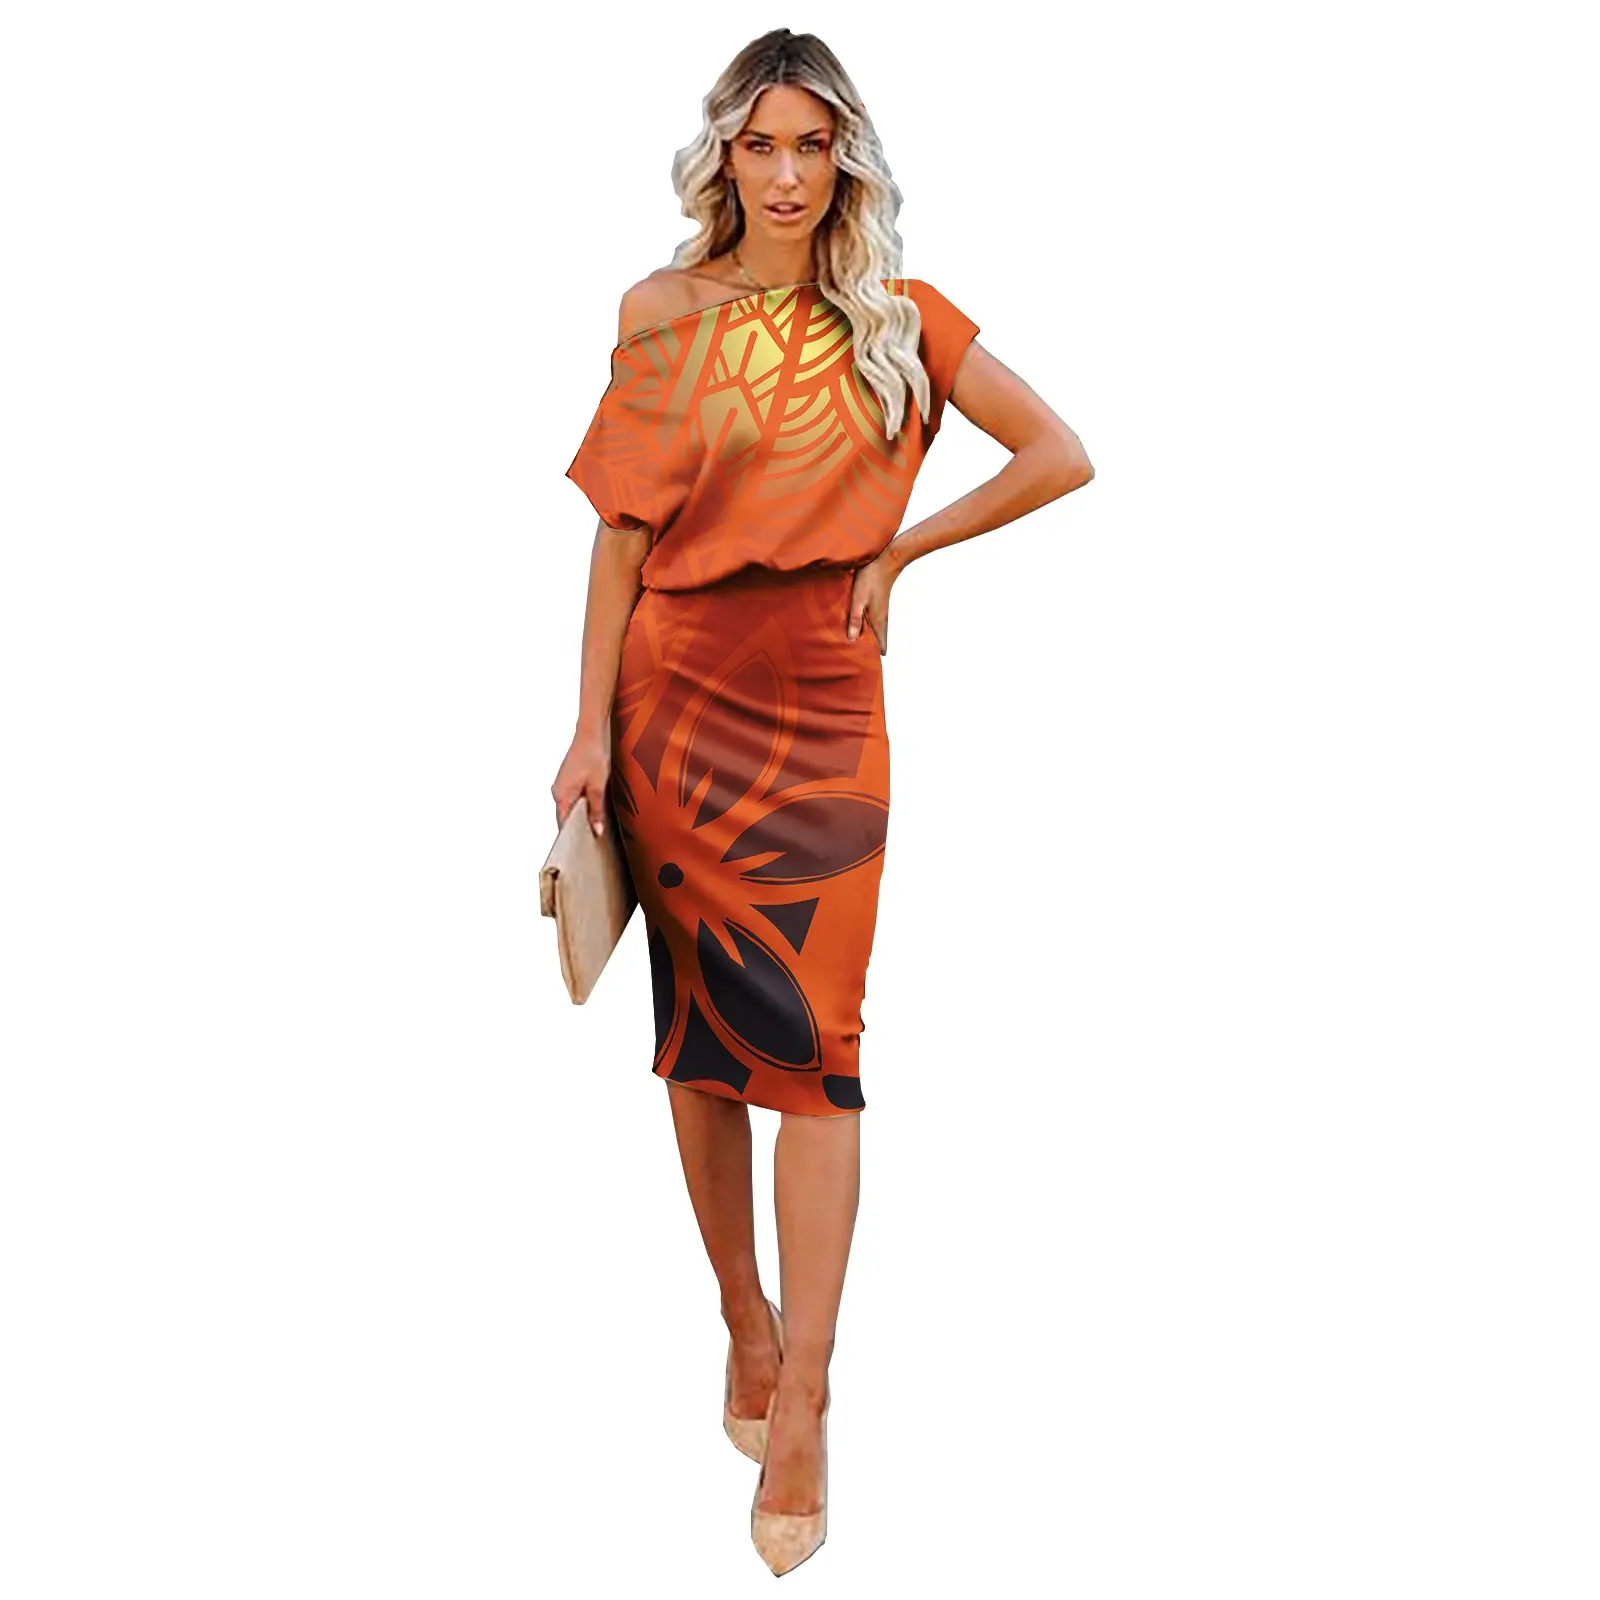 Drop Shipping Pacific Islands Polynesian Tribal Dress Print on Demand Cozy Dress New Fashion Women Clothing